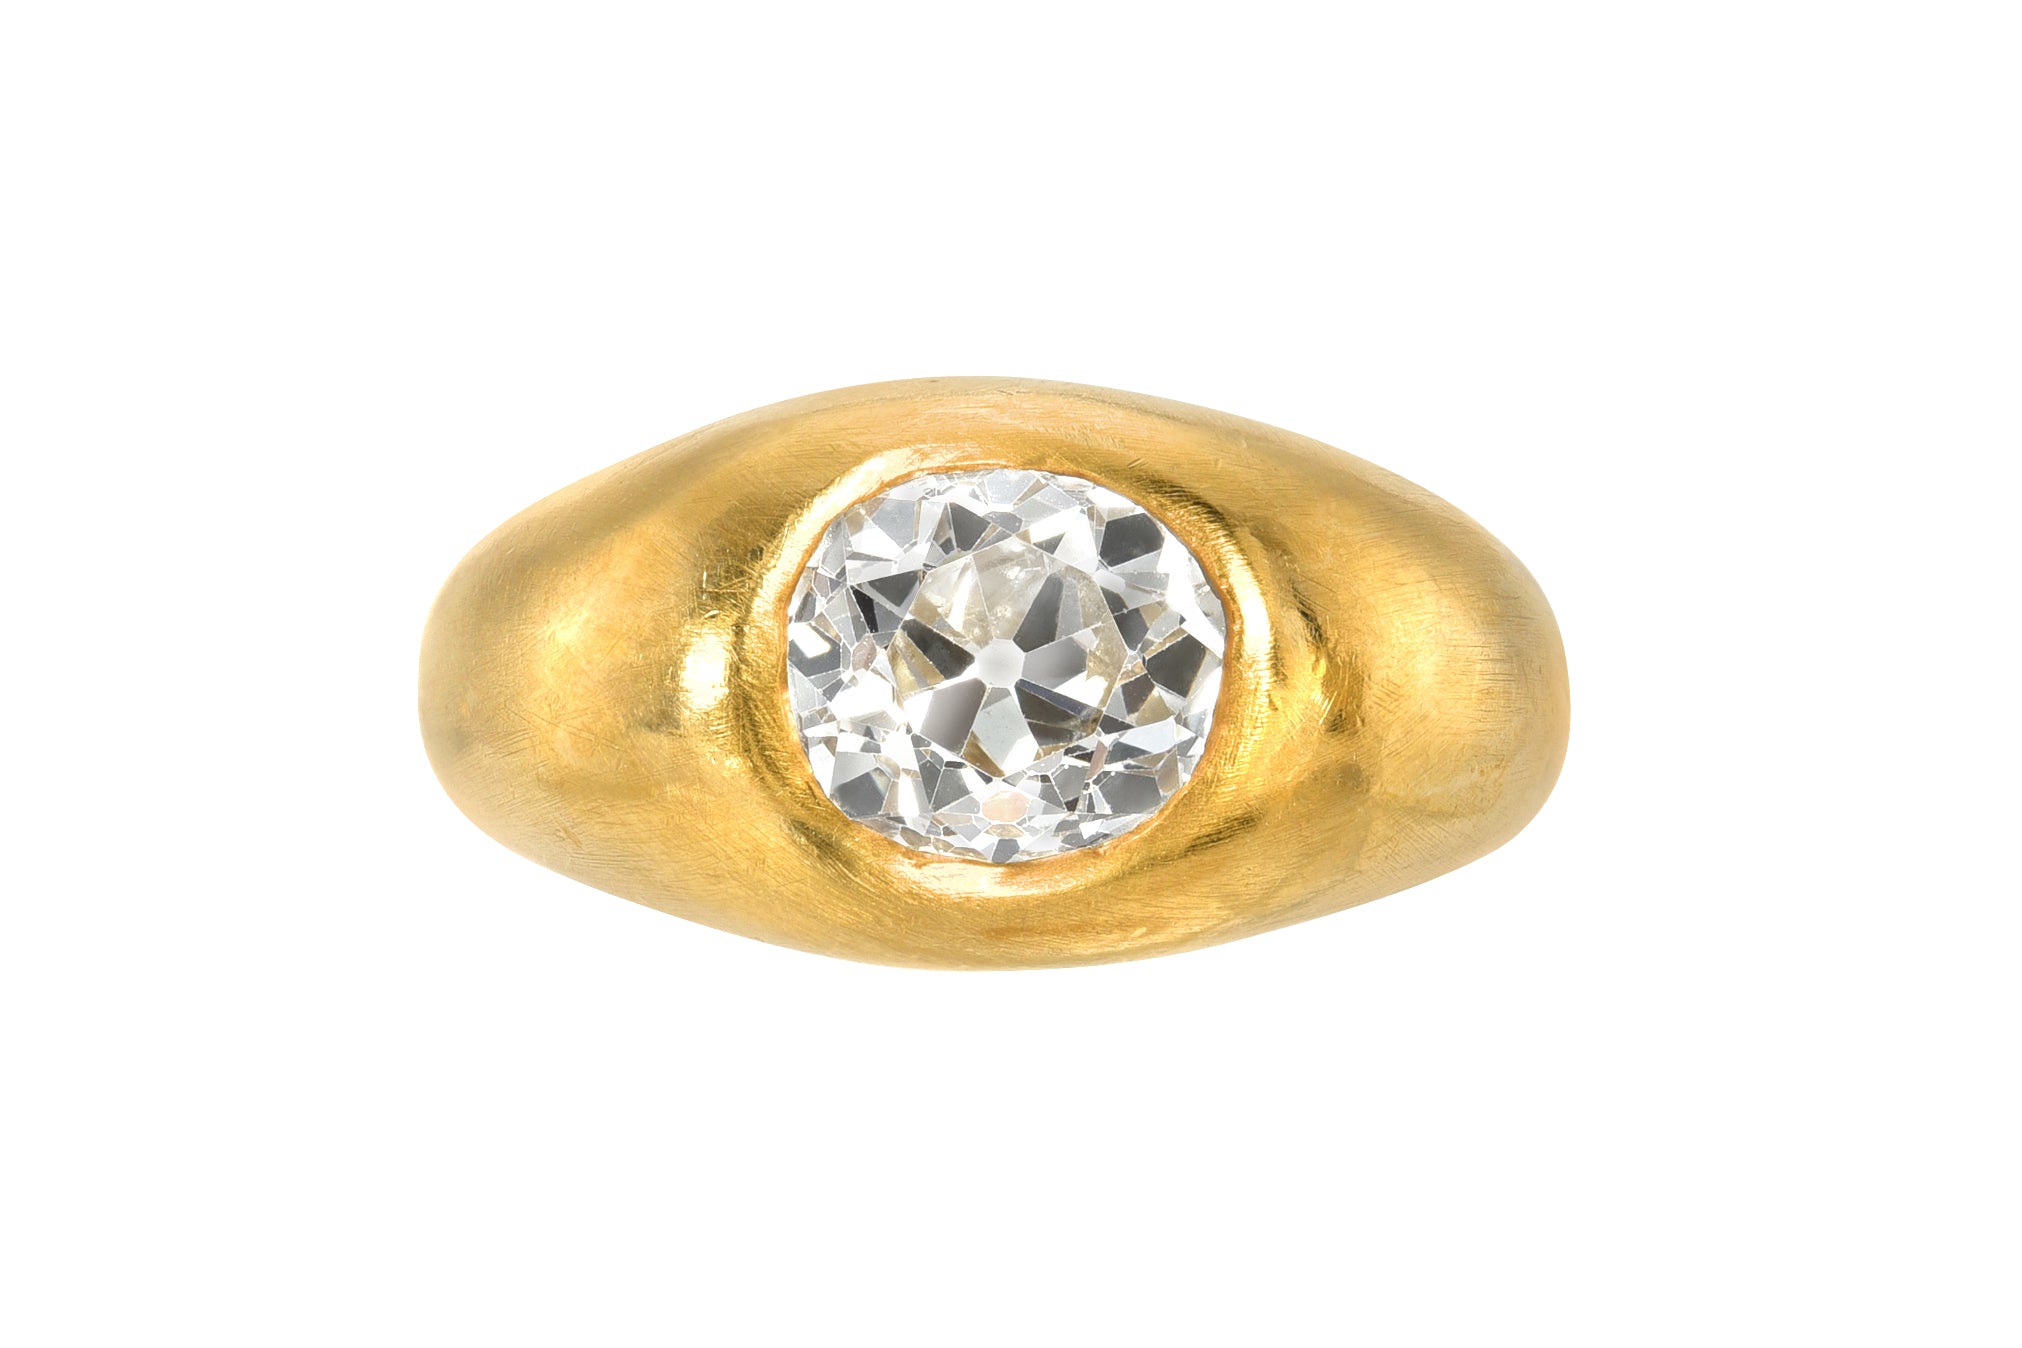 DARIUS JEWELS DARYA KHONSARY ANTIQUE OLD MINE CUT DIAMOND GEM SIGNET RING